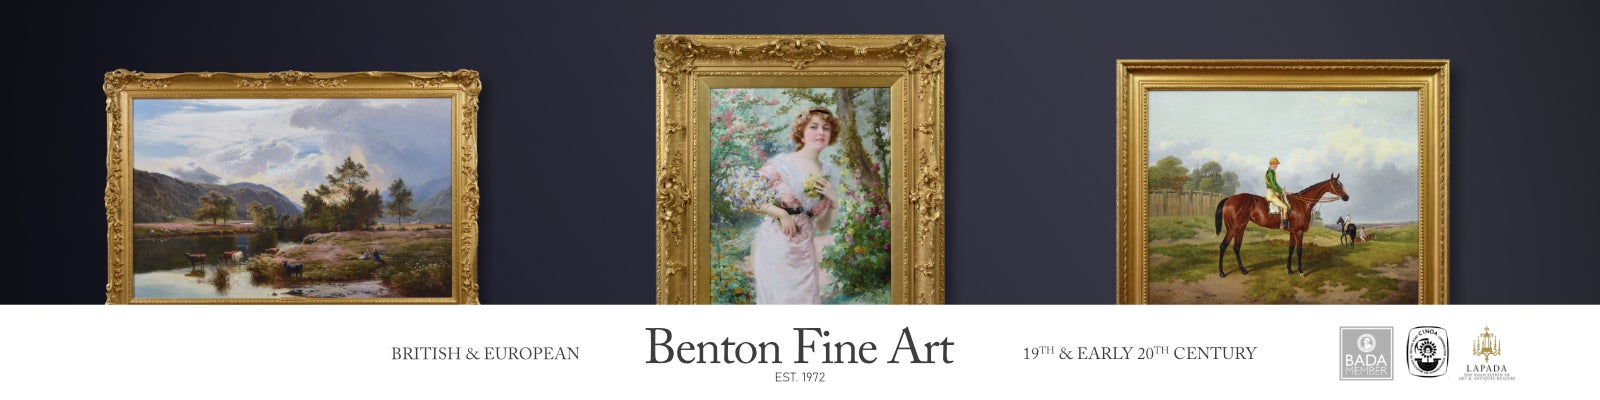 Benton Fine Art